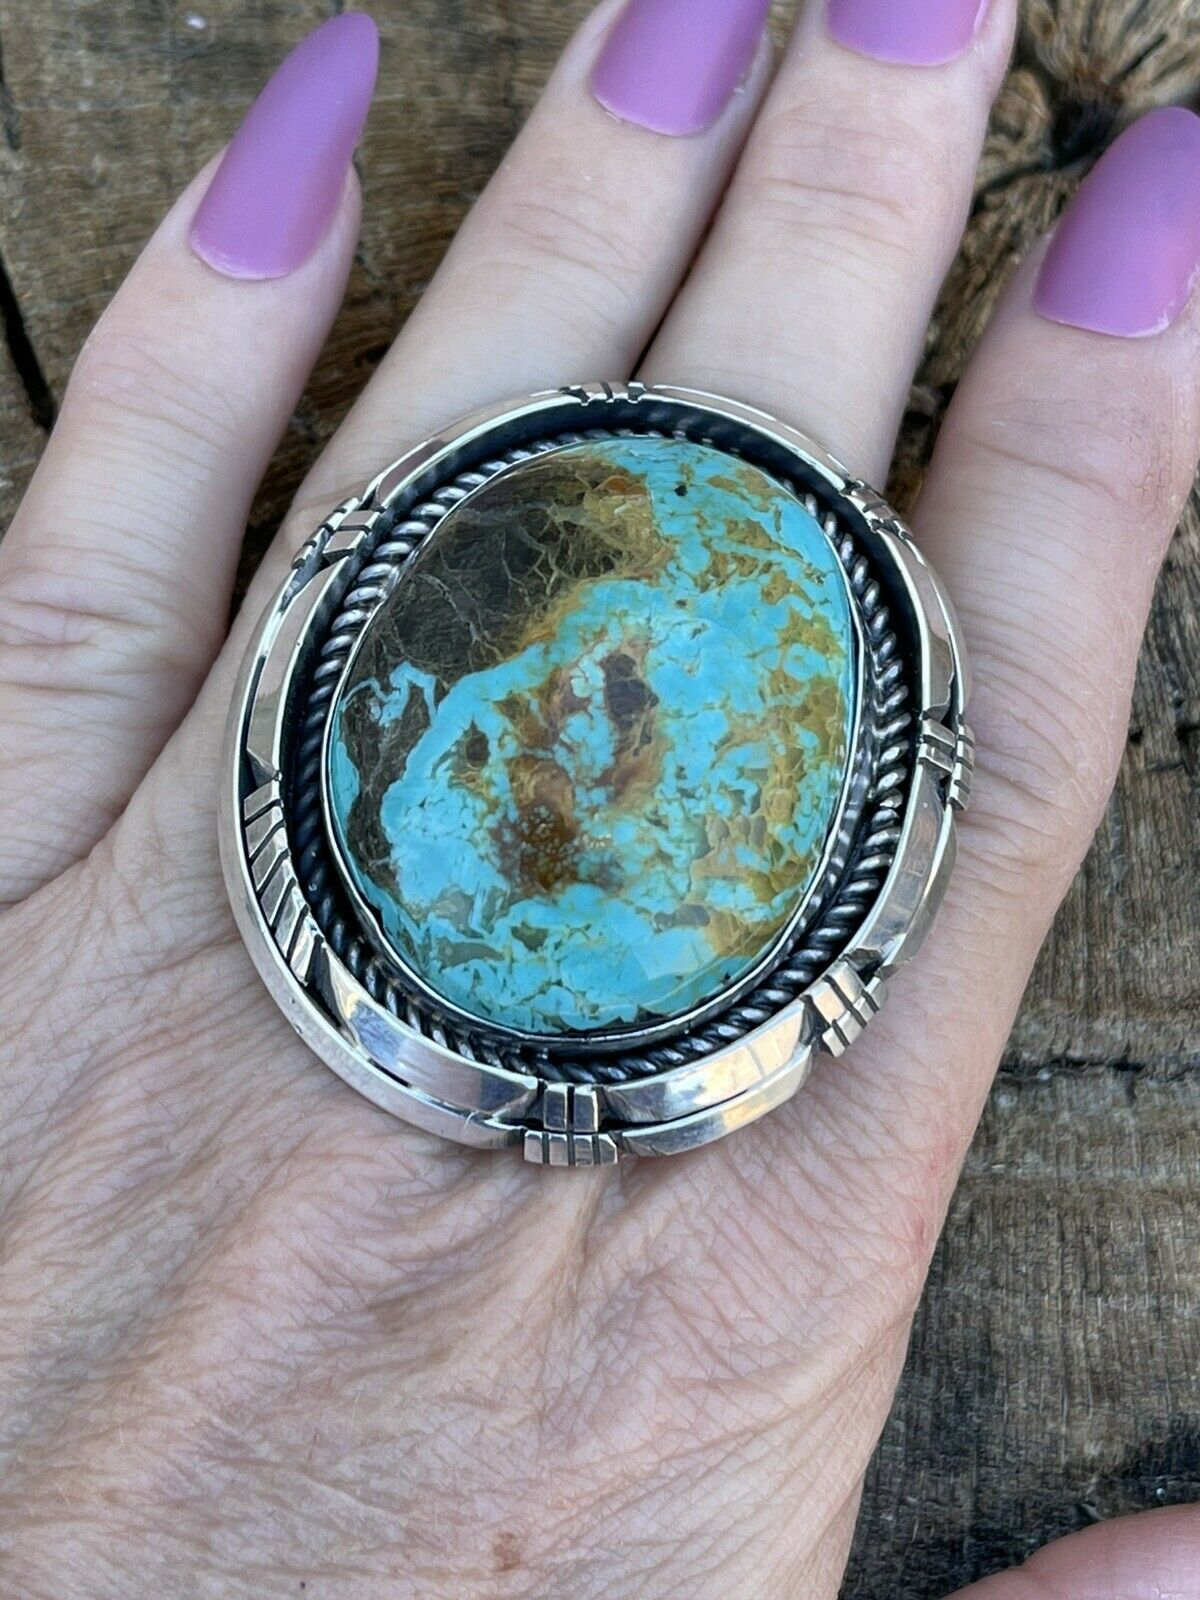 Navajo Sterling Silver Turquoise Shadow Box Ring Sz 8.5